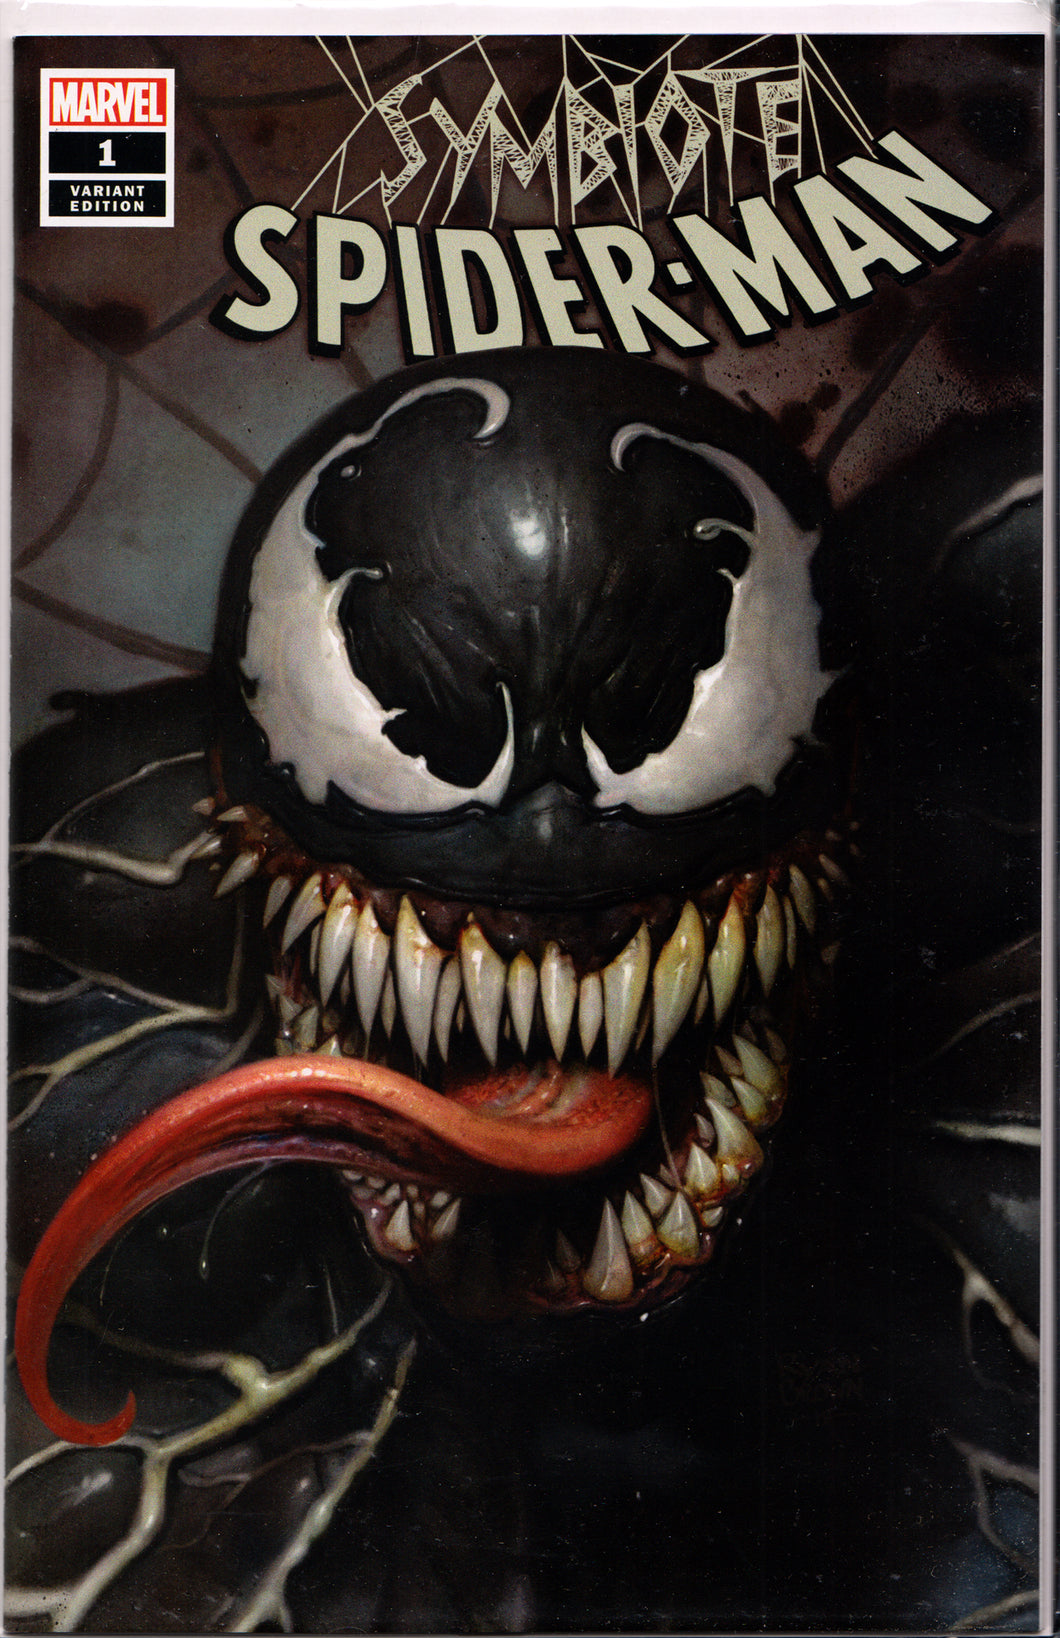 SYMBIOTE SPIDER-MAN #1 (RYAN BROWN VARIANT) COMIC BOOK ~ Marvel Comics